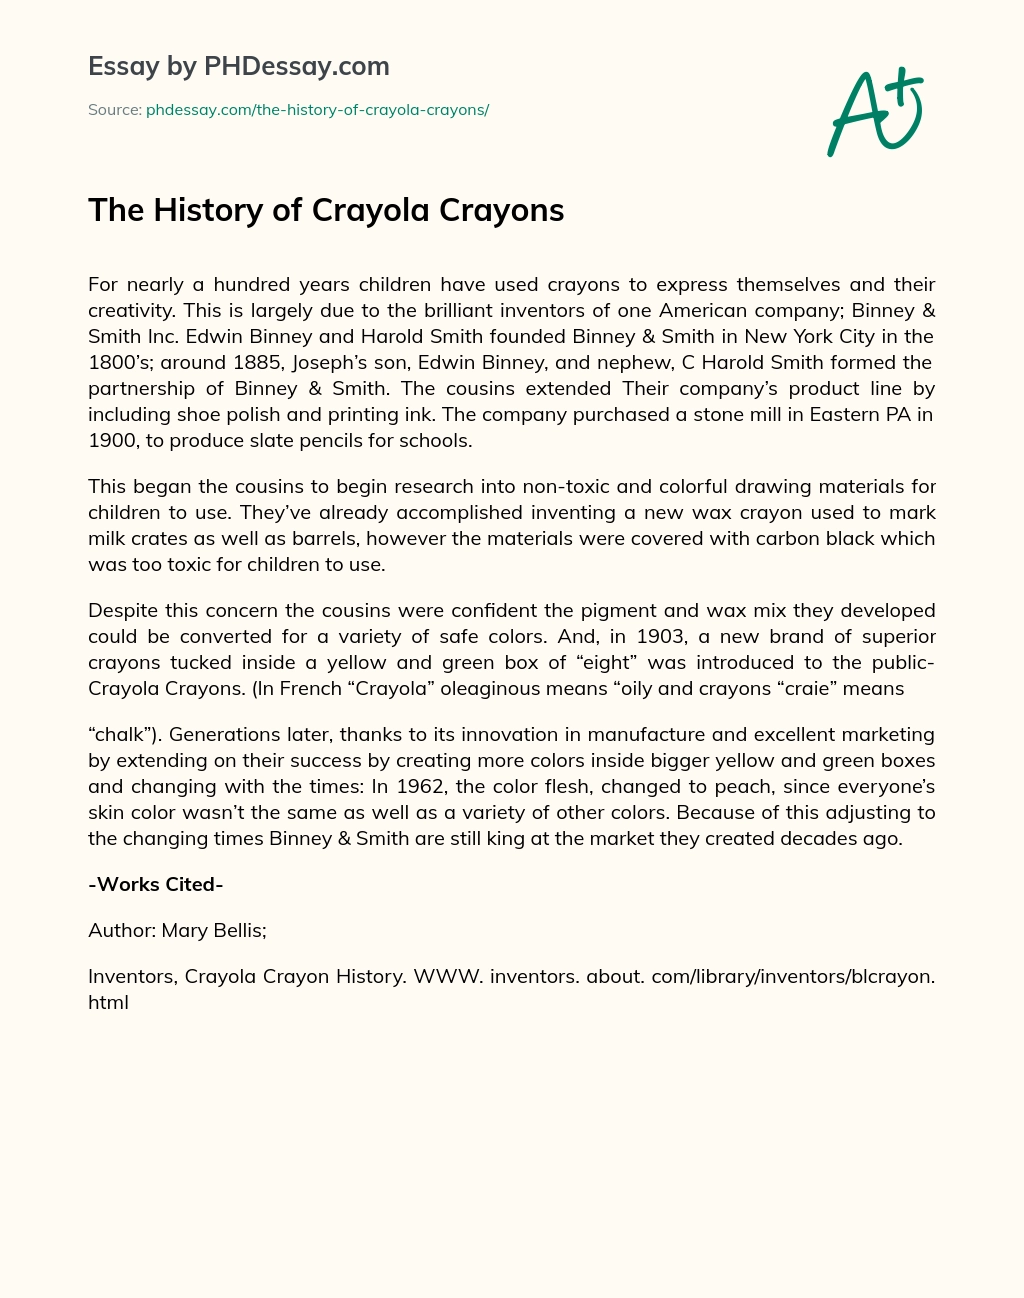 The History of Crayola Crayons essay